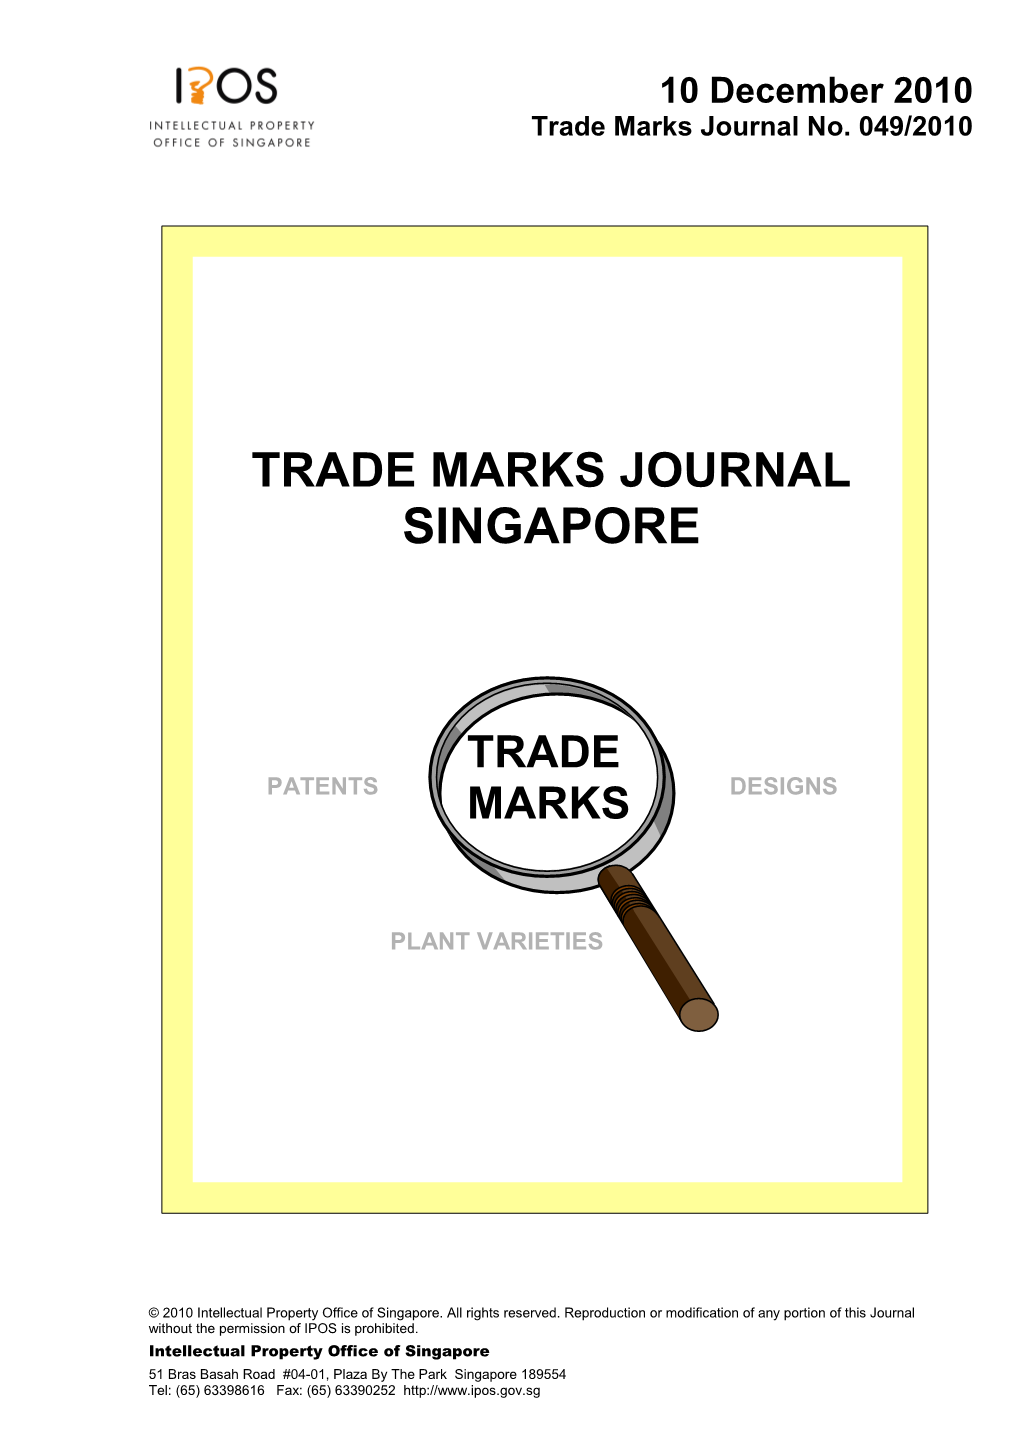 Trade Marks Journal Singapore Trade Marks